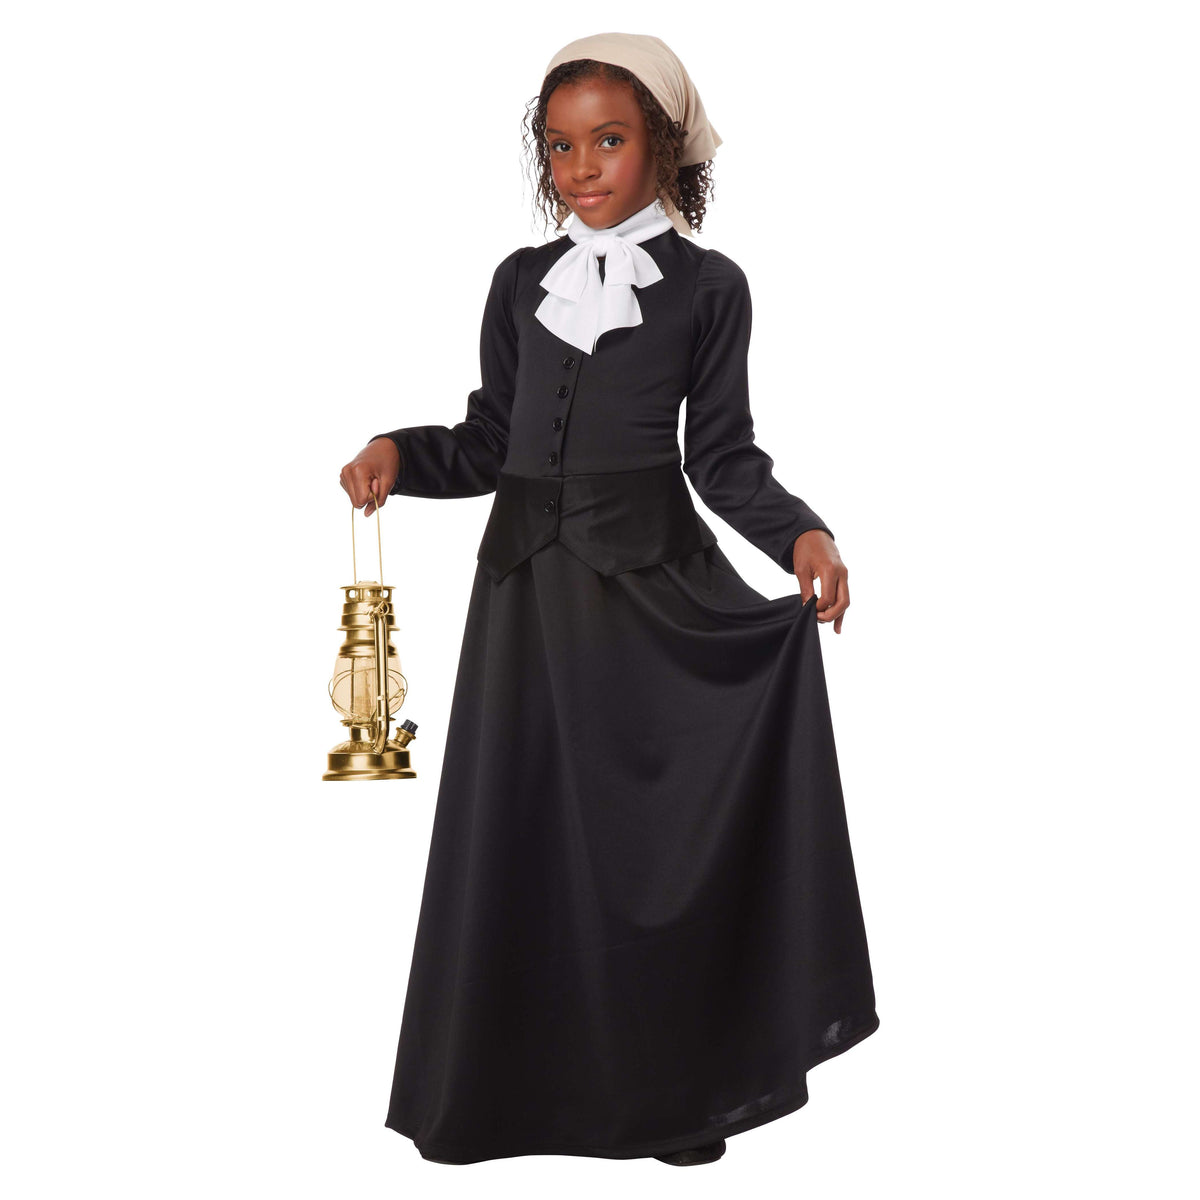 Harriet Tubman/Susan B. Anthony Child Costume